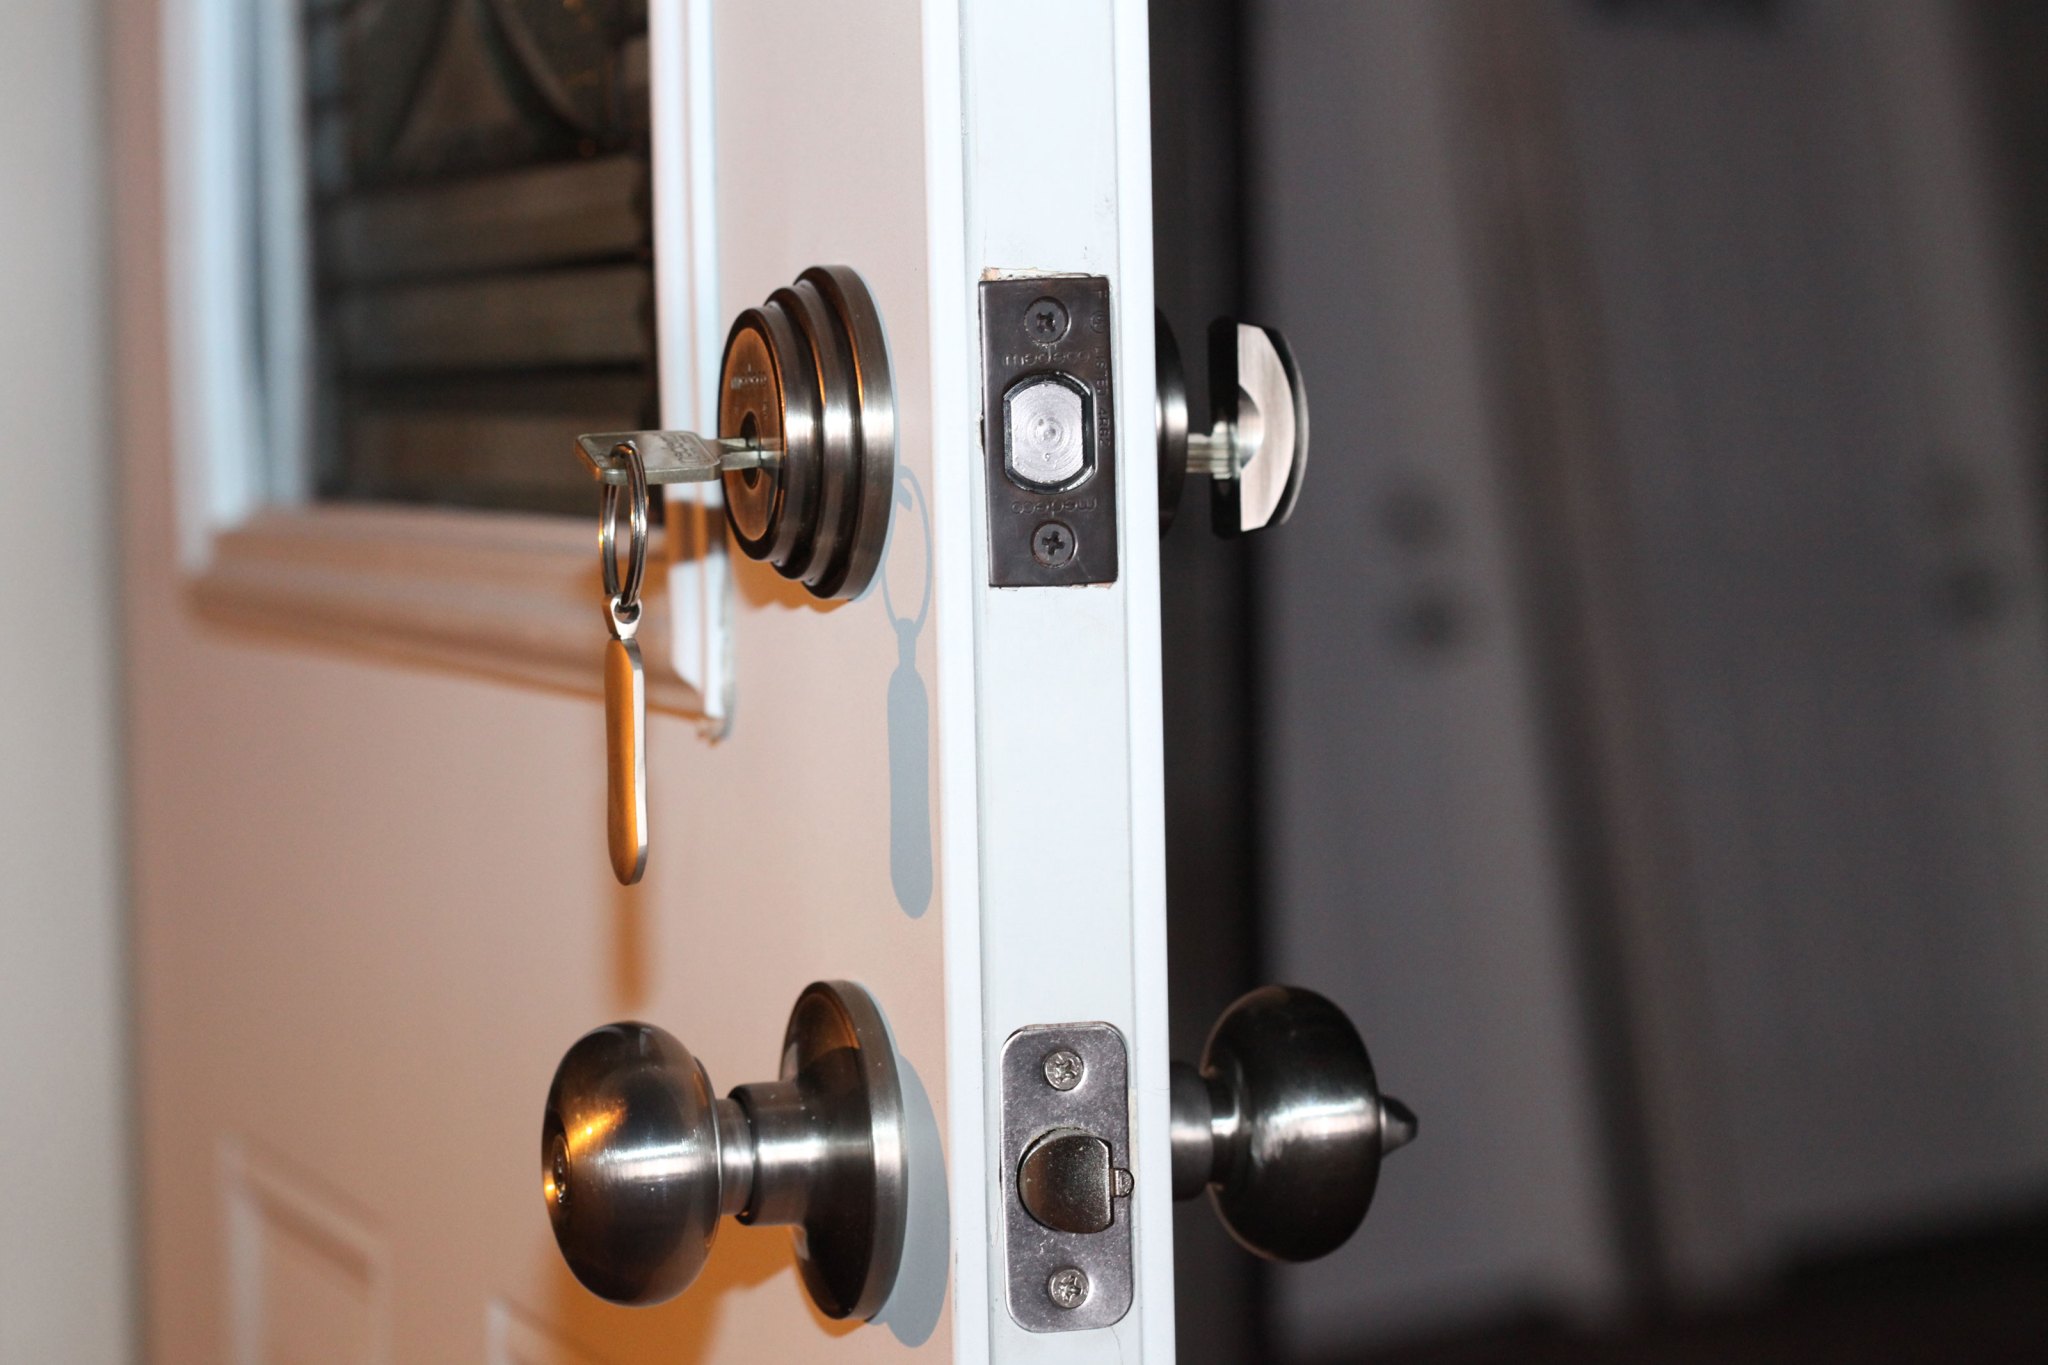 Are Electronic Door Locks Safe?